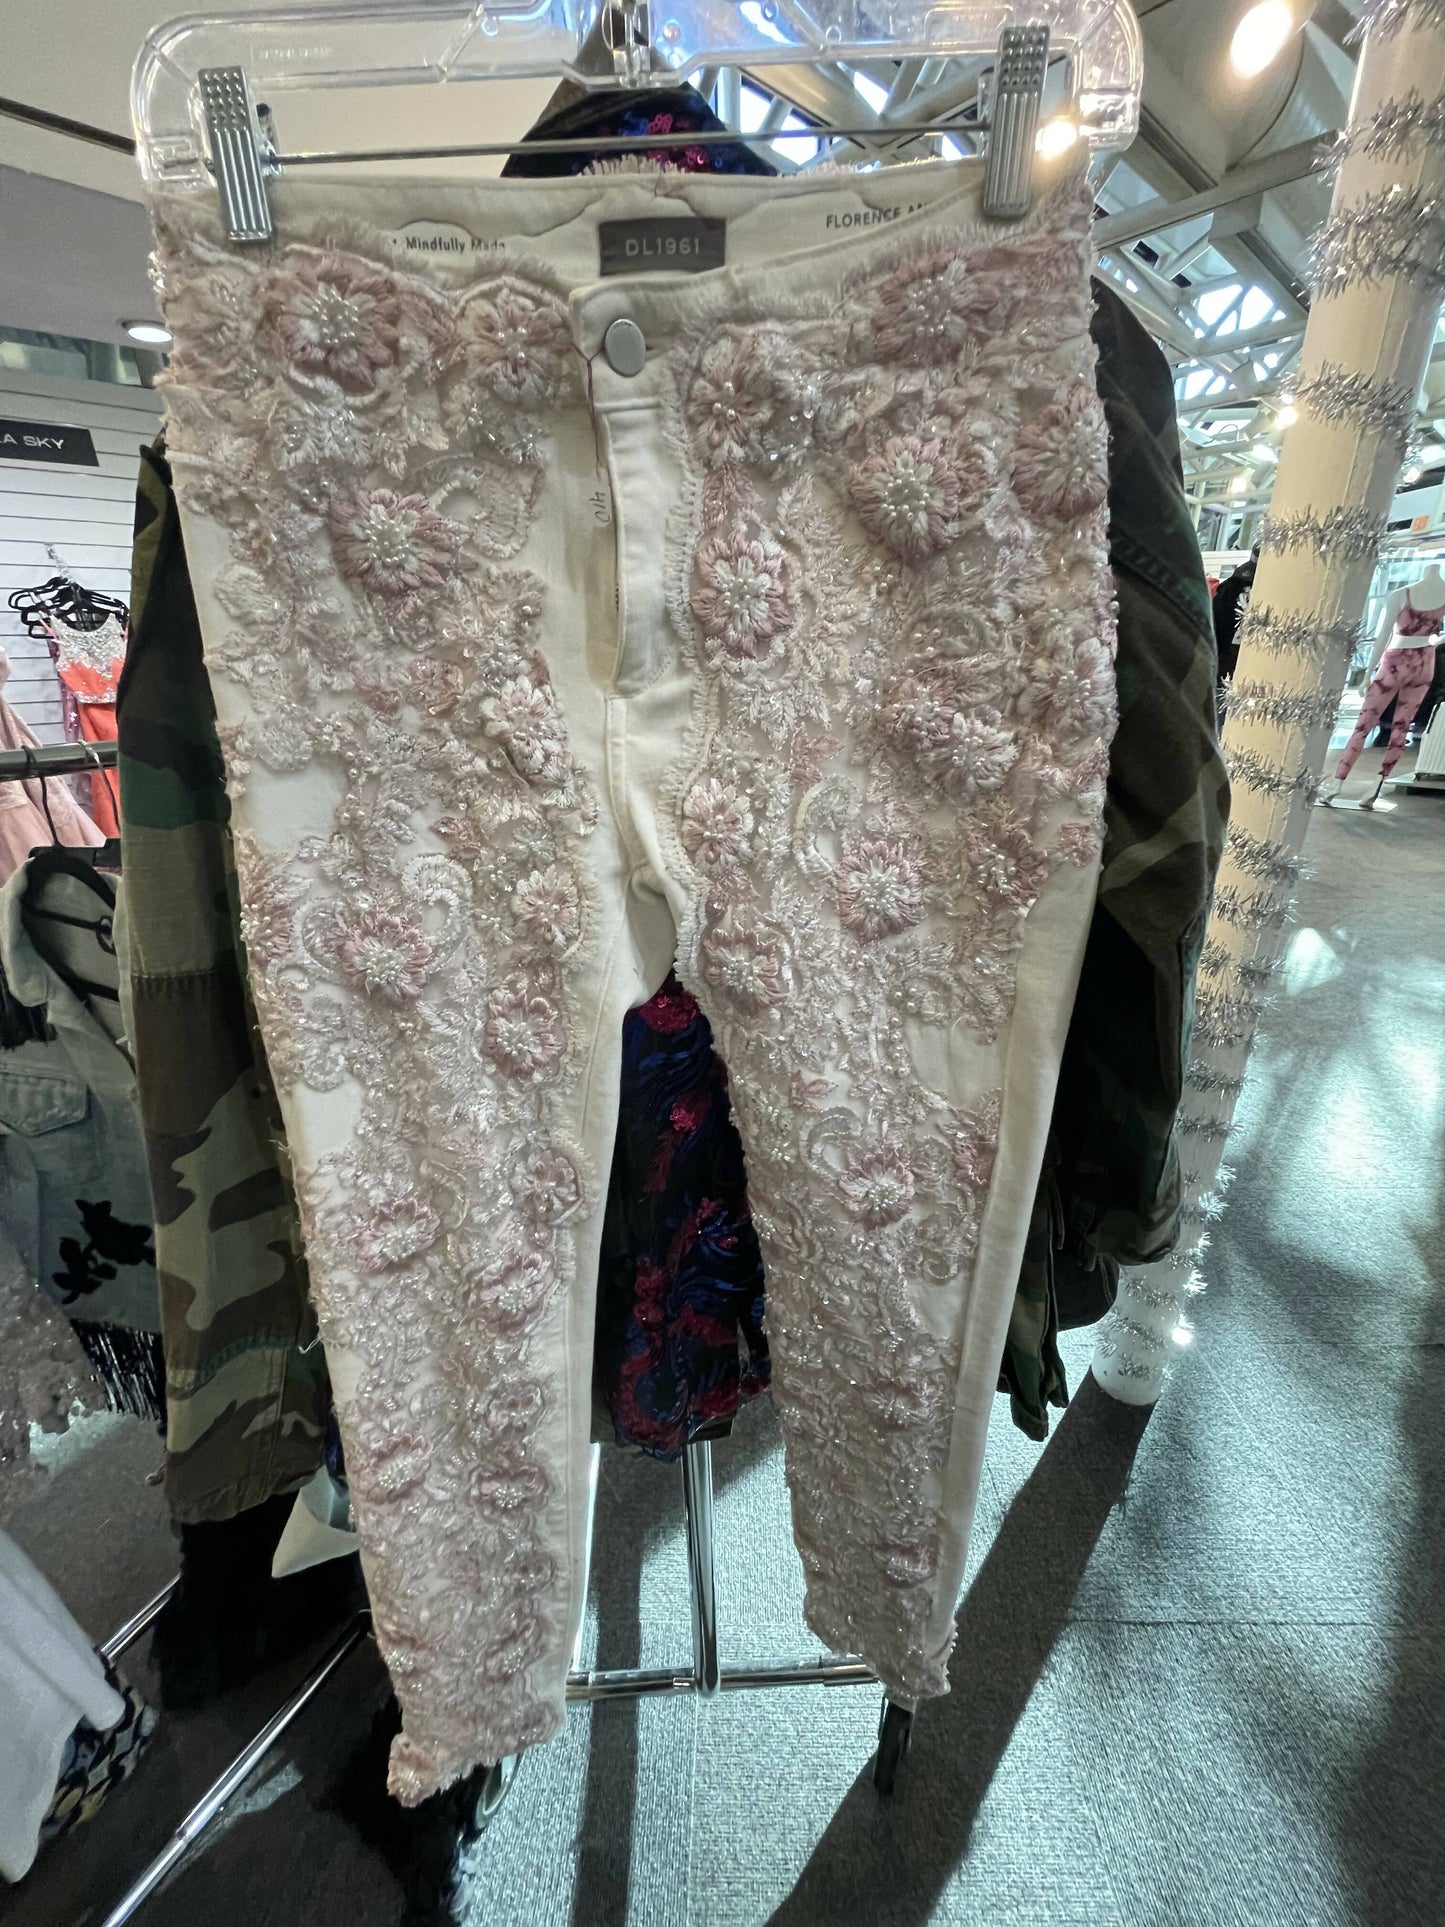 Embellished pant